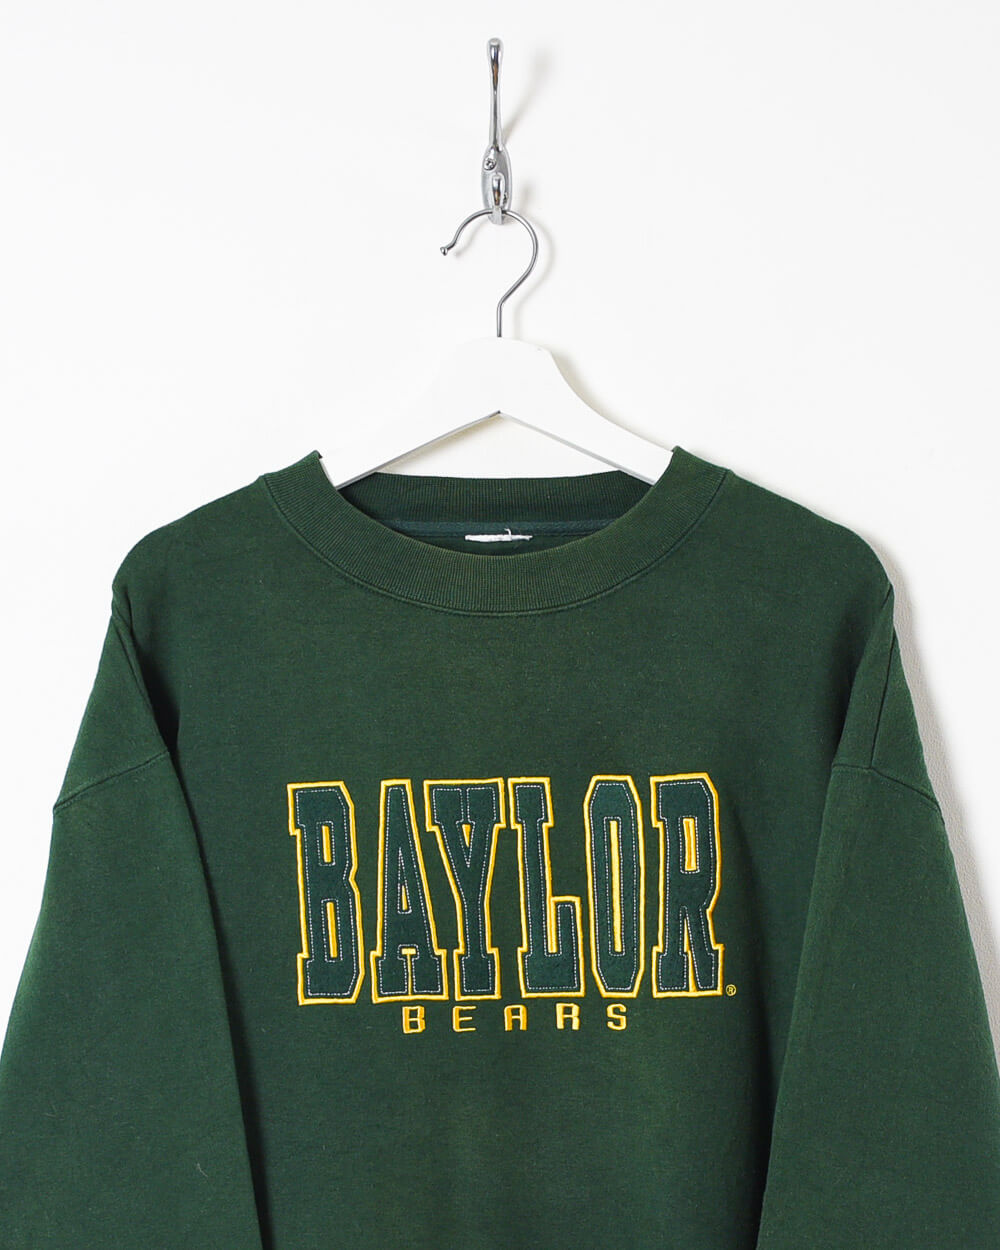 Green Baylor Bears Sweatshirt - Large